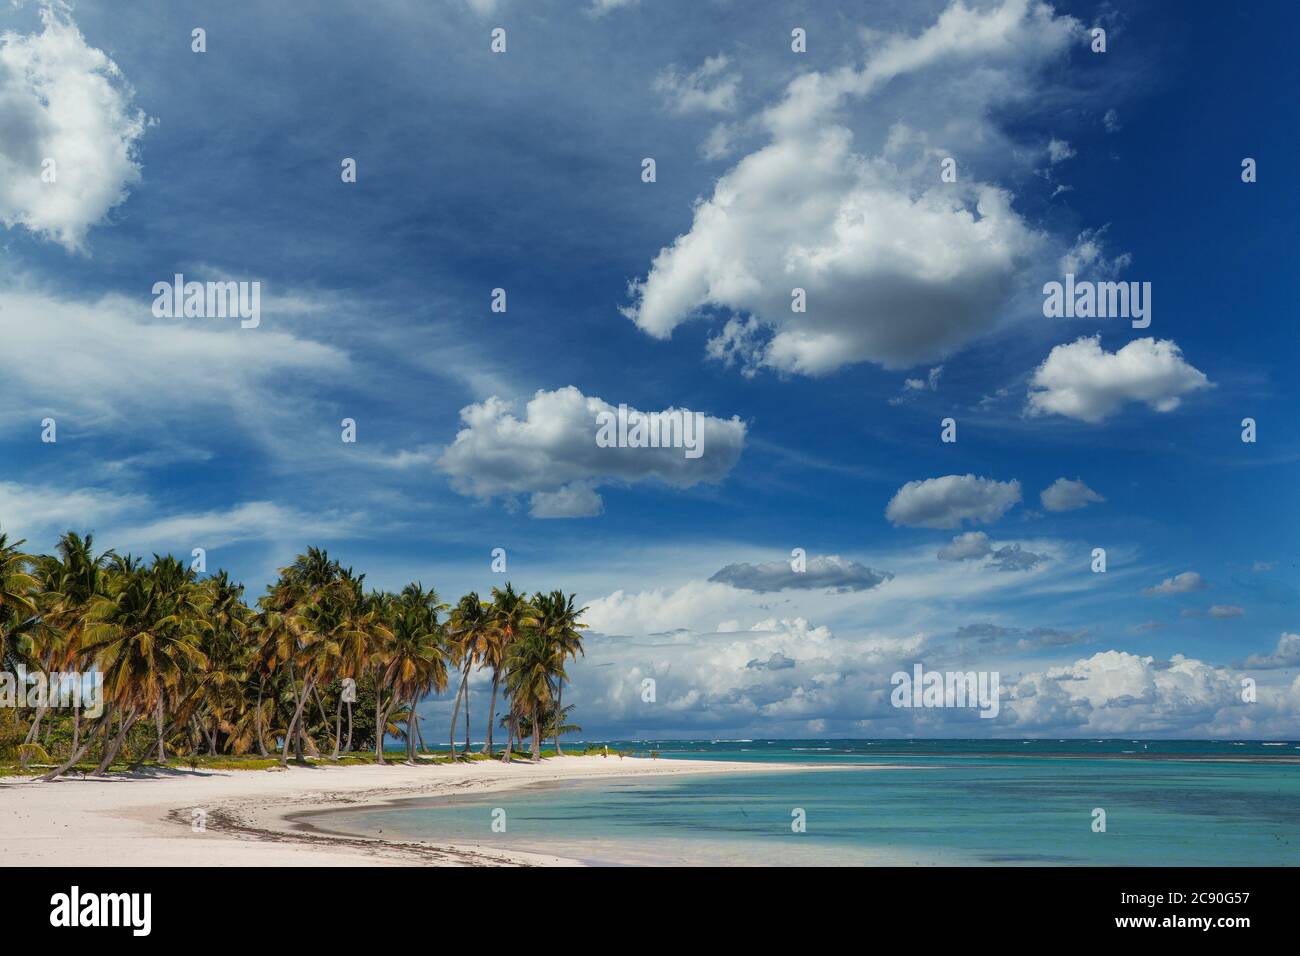 Caribbean, Punta Cana, Dominican Republic, Coconut palm trees over tropical beach Stock Photo